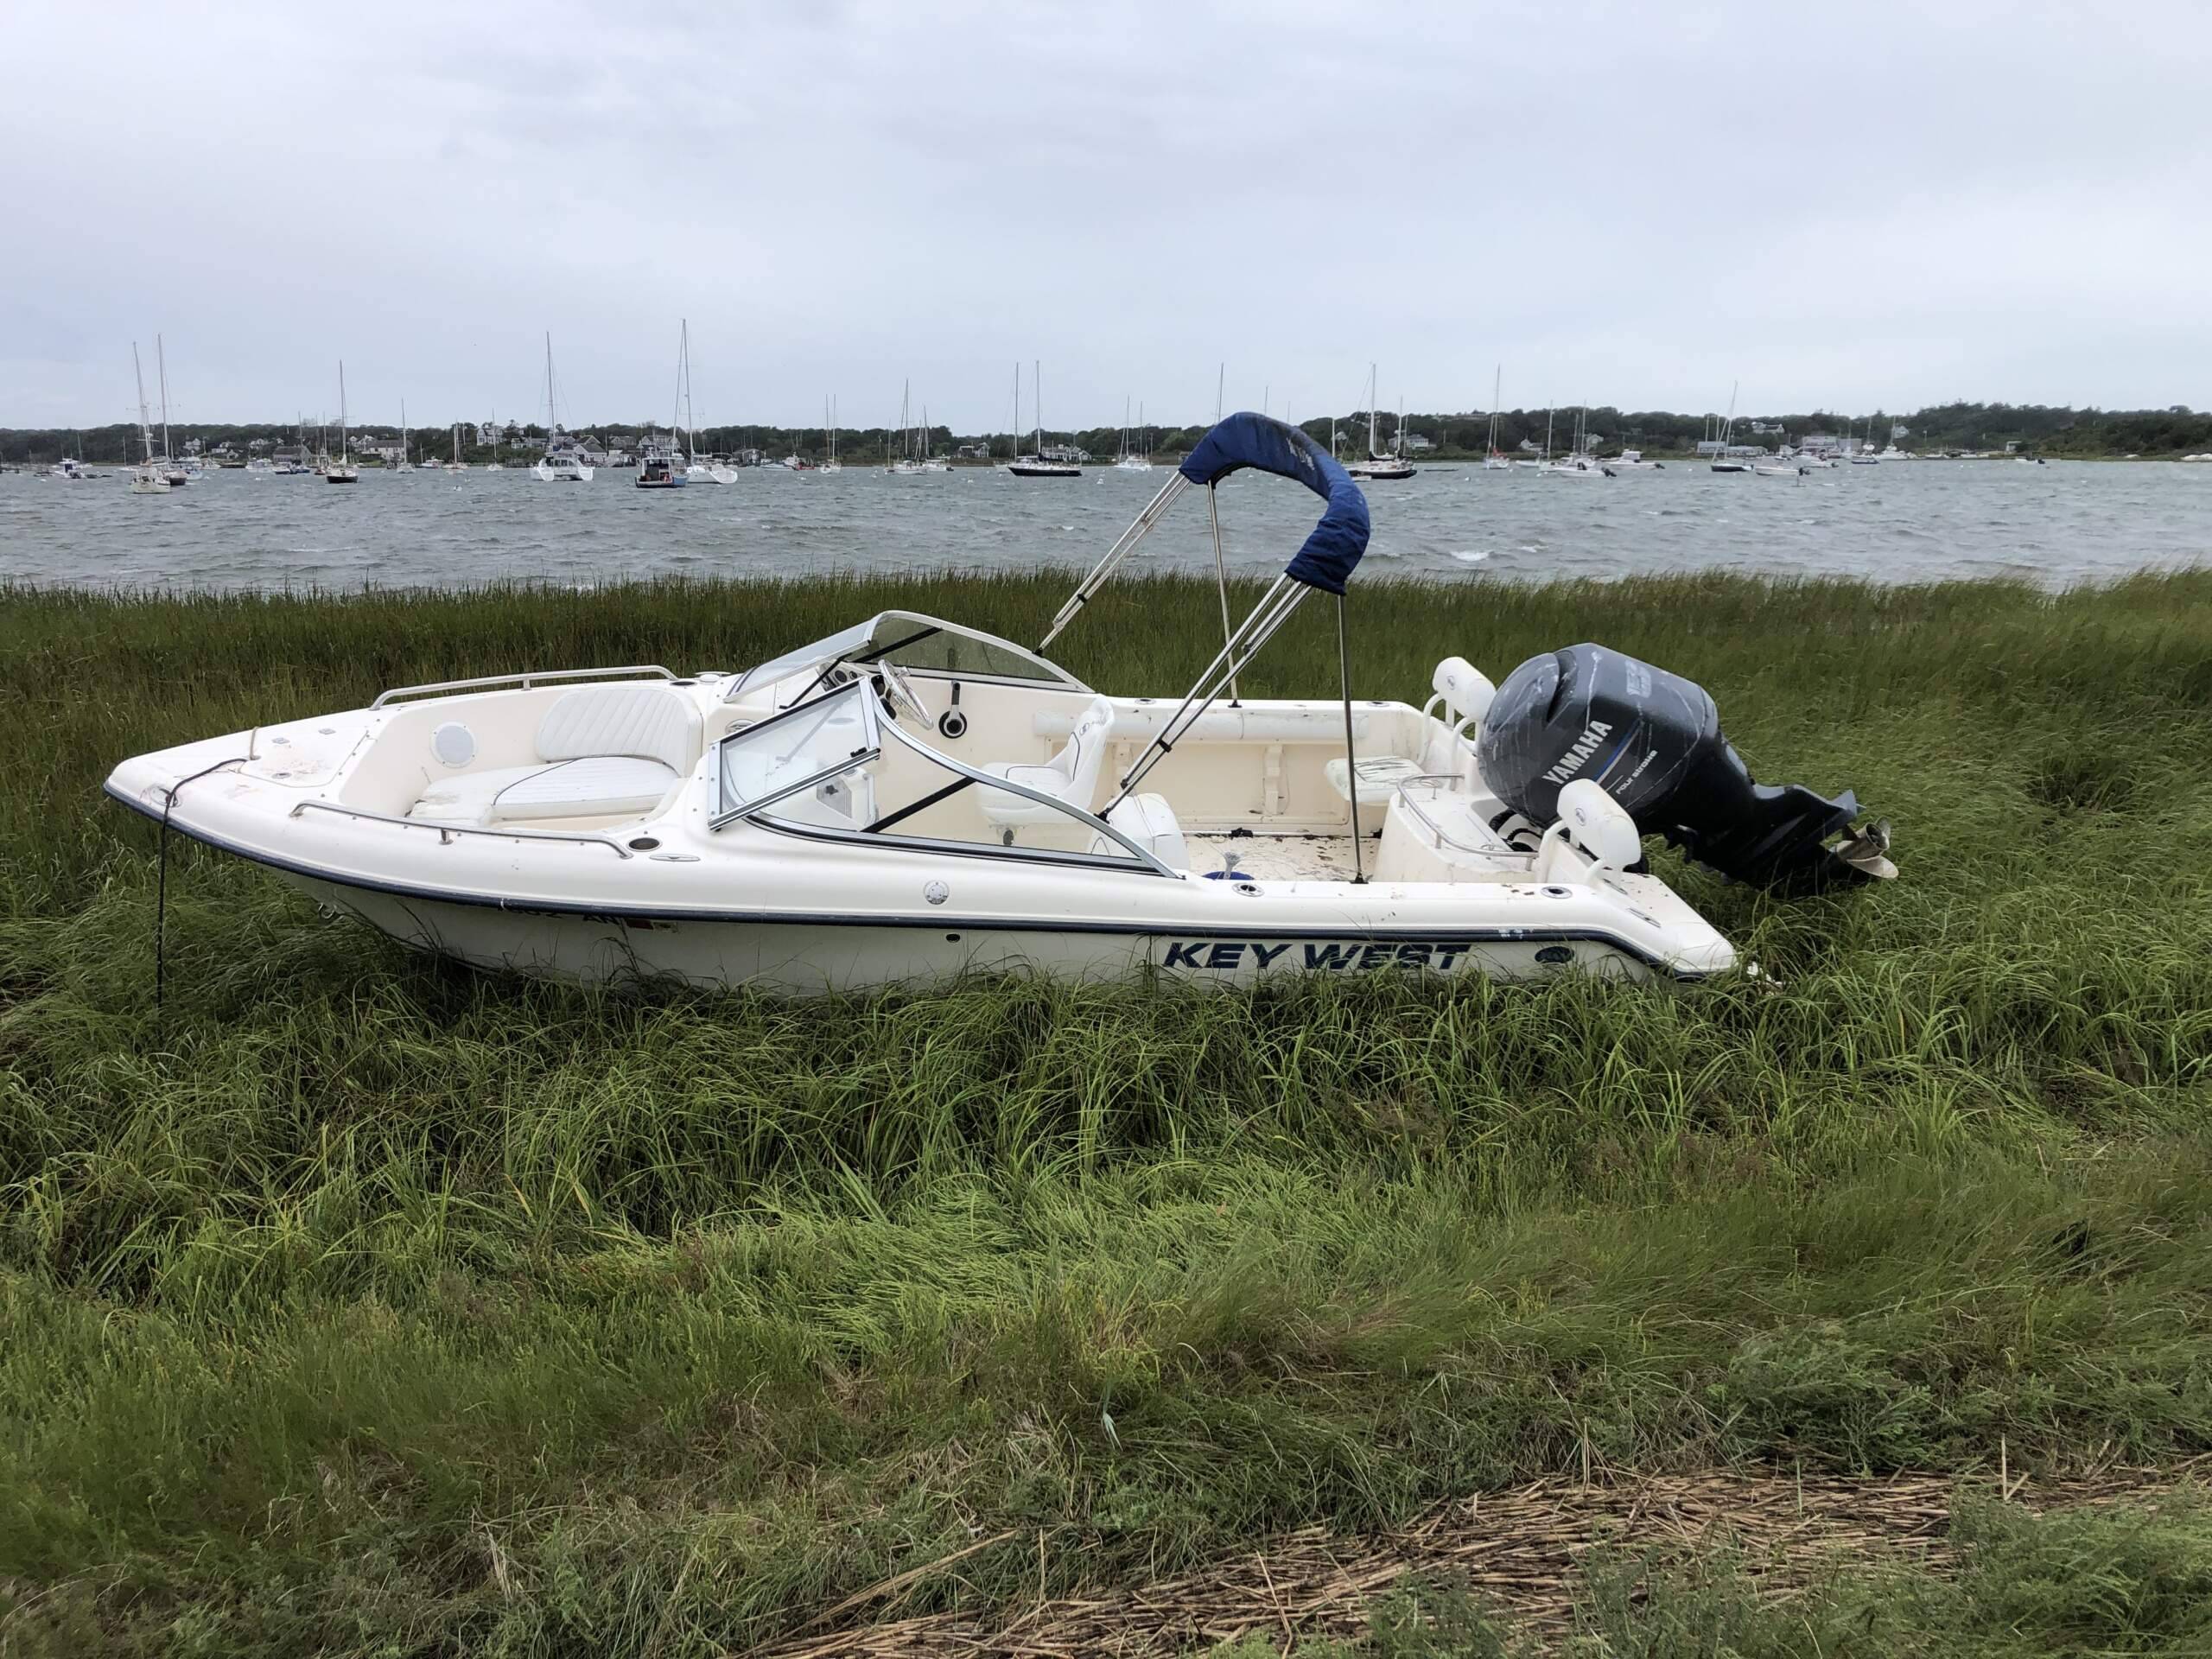 A boat broke loose from its mooring in Stage Harbor in Chatham. (Lynn Jolicoeur/WBUR)